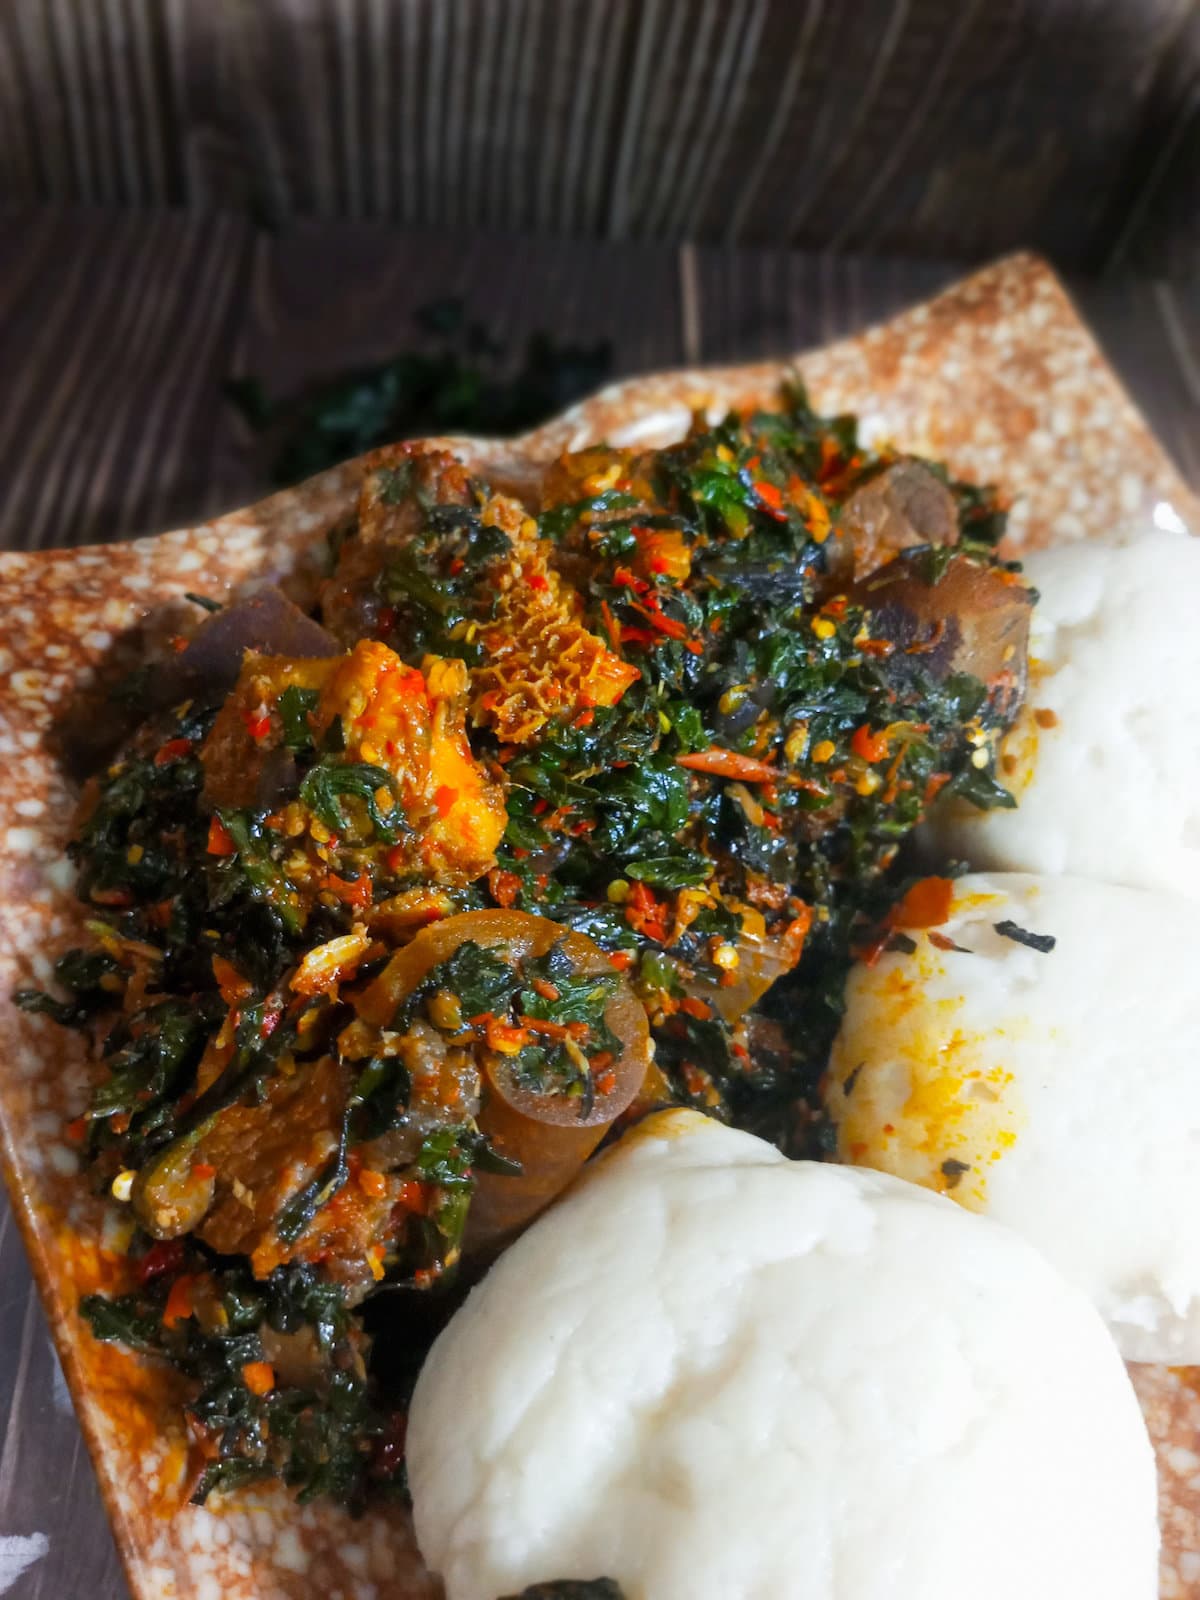 How To Make Efo Riro (Easy Nigerian Spinach Stew Recipe)